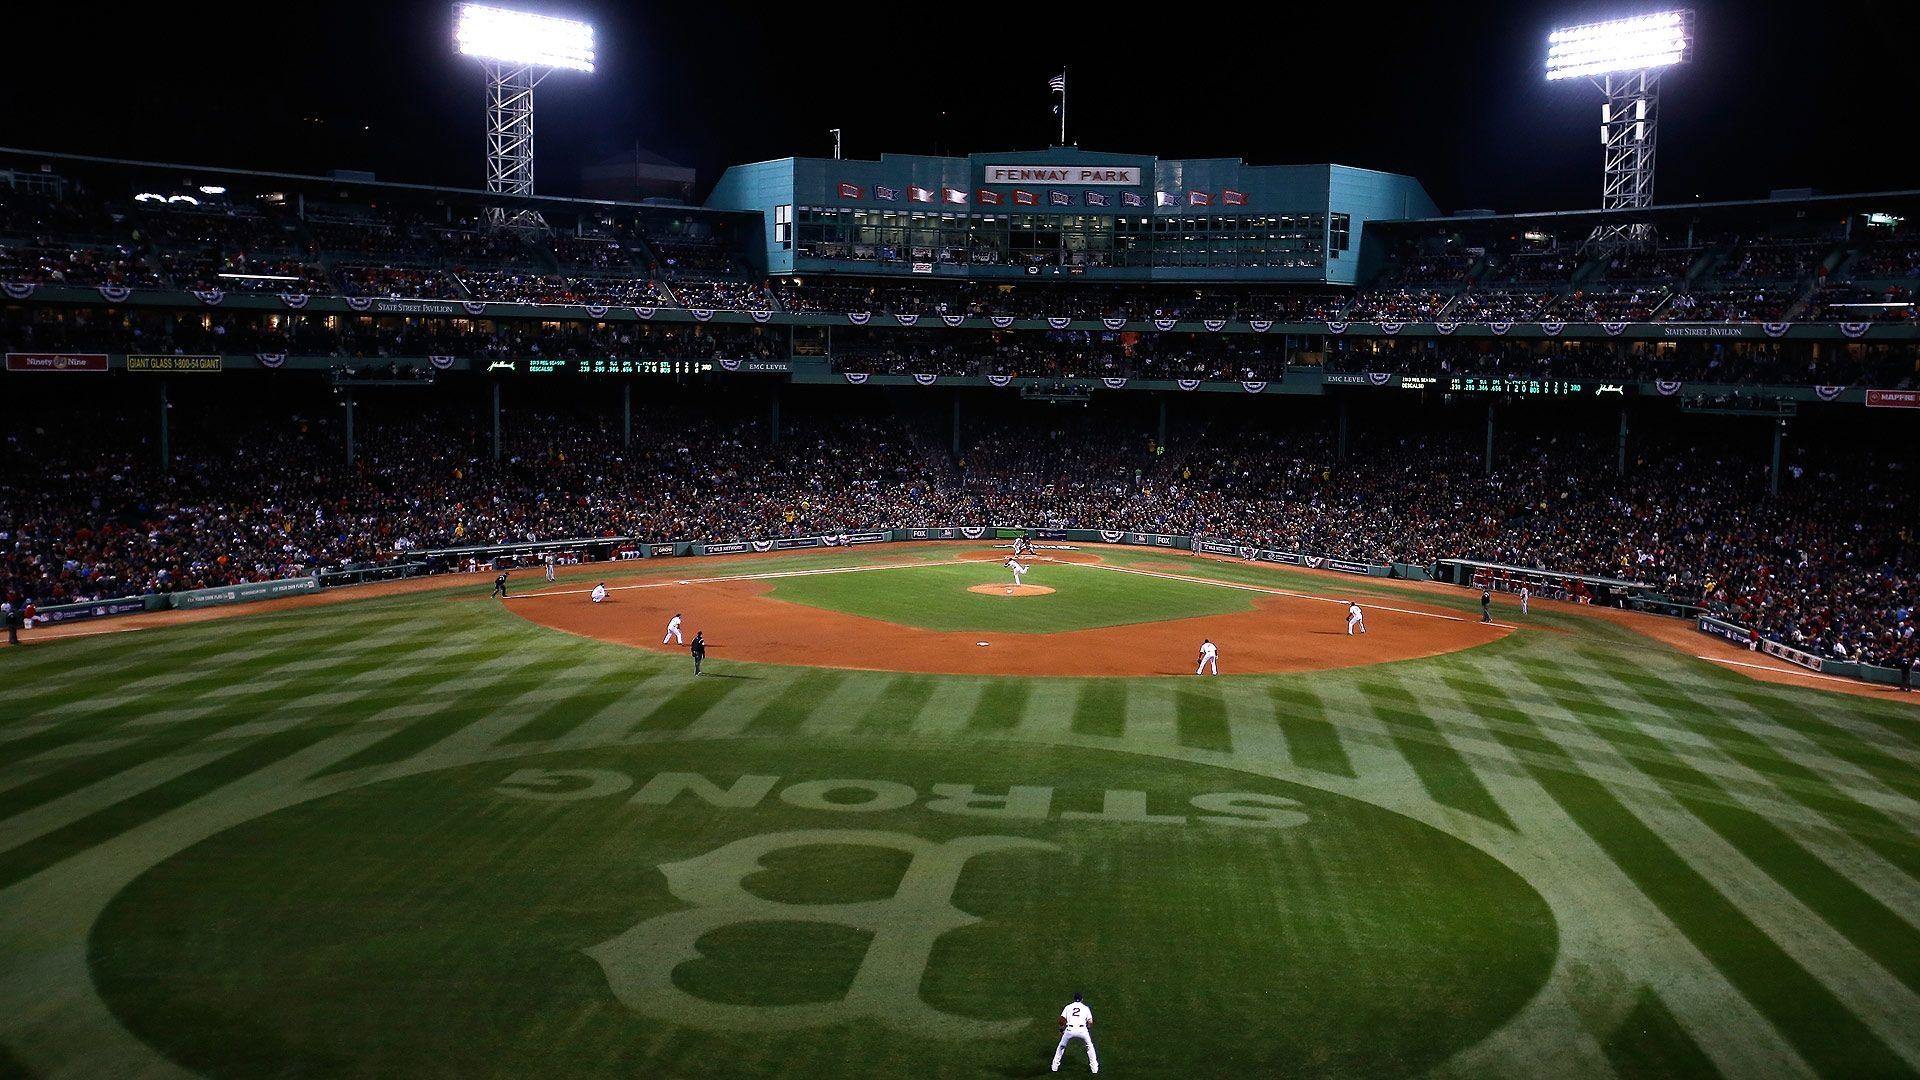 Boston Red Sox: Fenway Park, A baseball stadium located in Boston, Massachusetts. 1920x1080 Full HD Background.